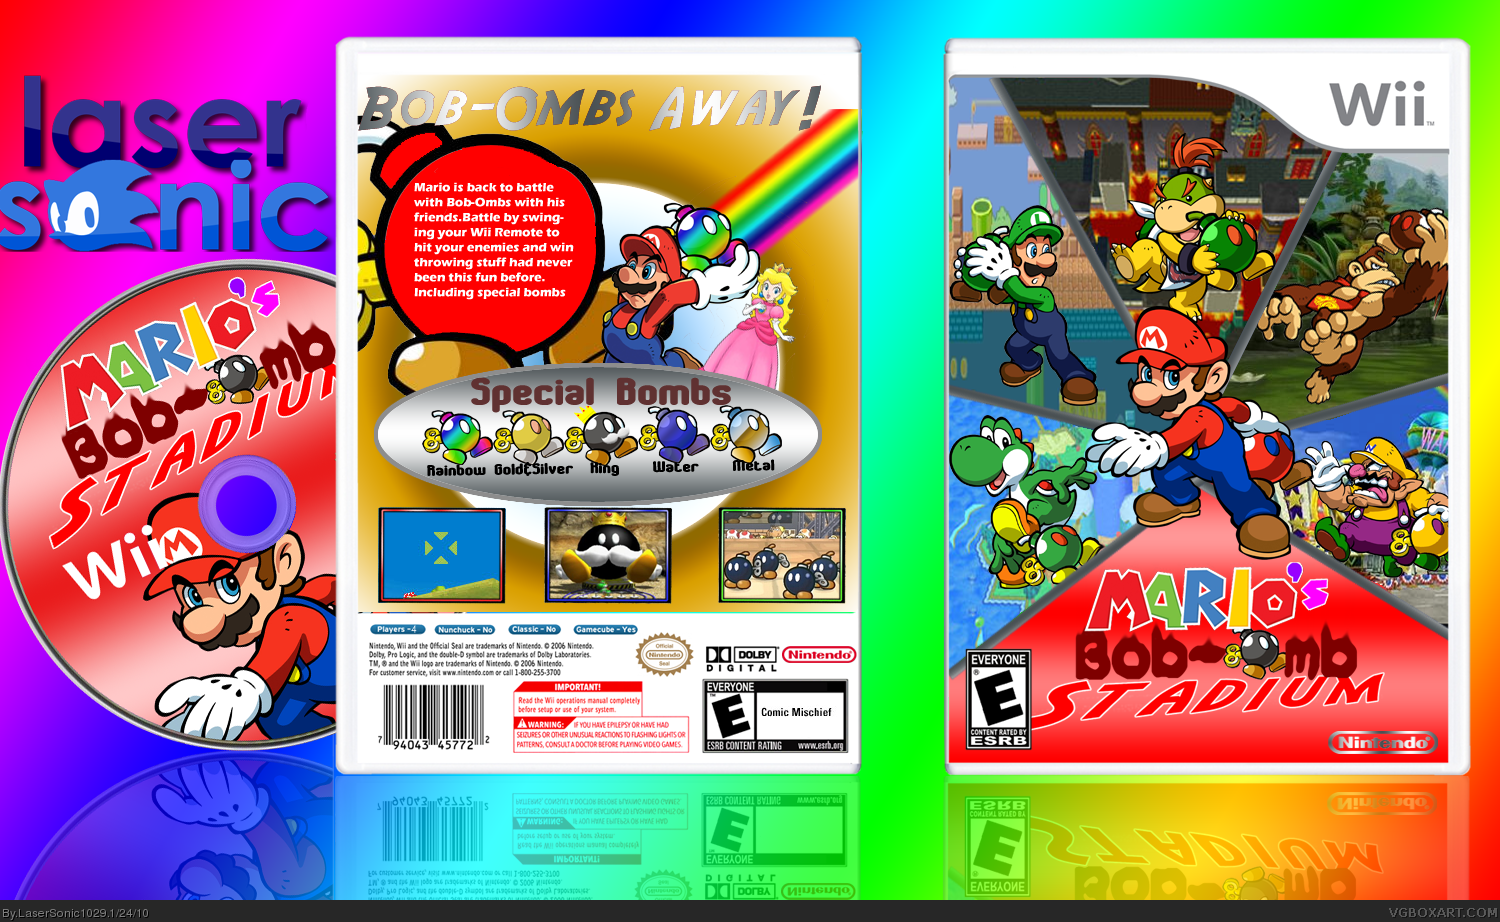 Mario's Bob-Omb Stadium box cover